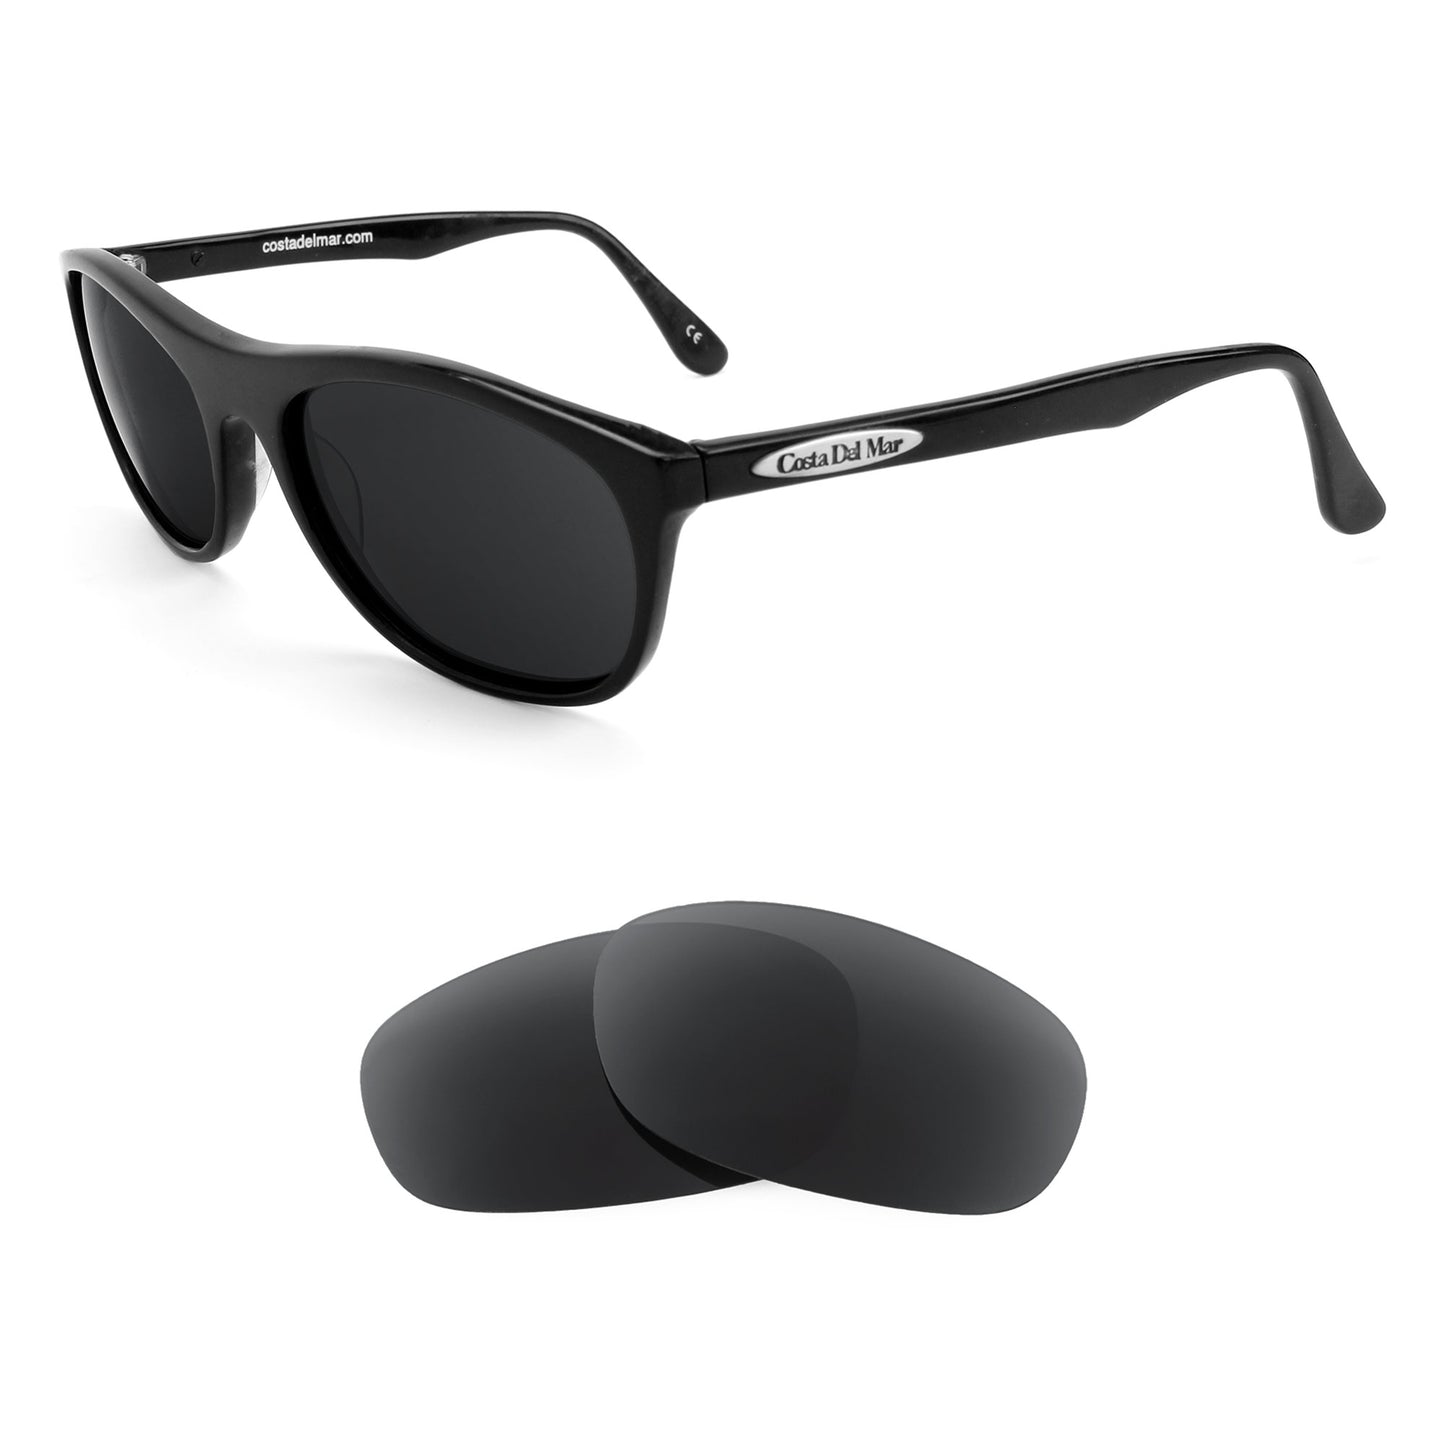 Costa EU-11 Euro sunglasses with replacement lenses